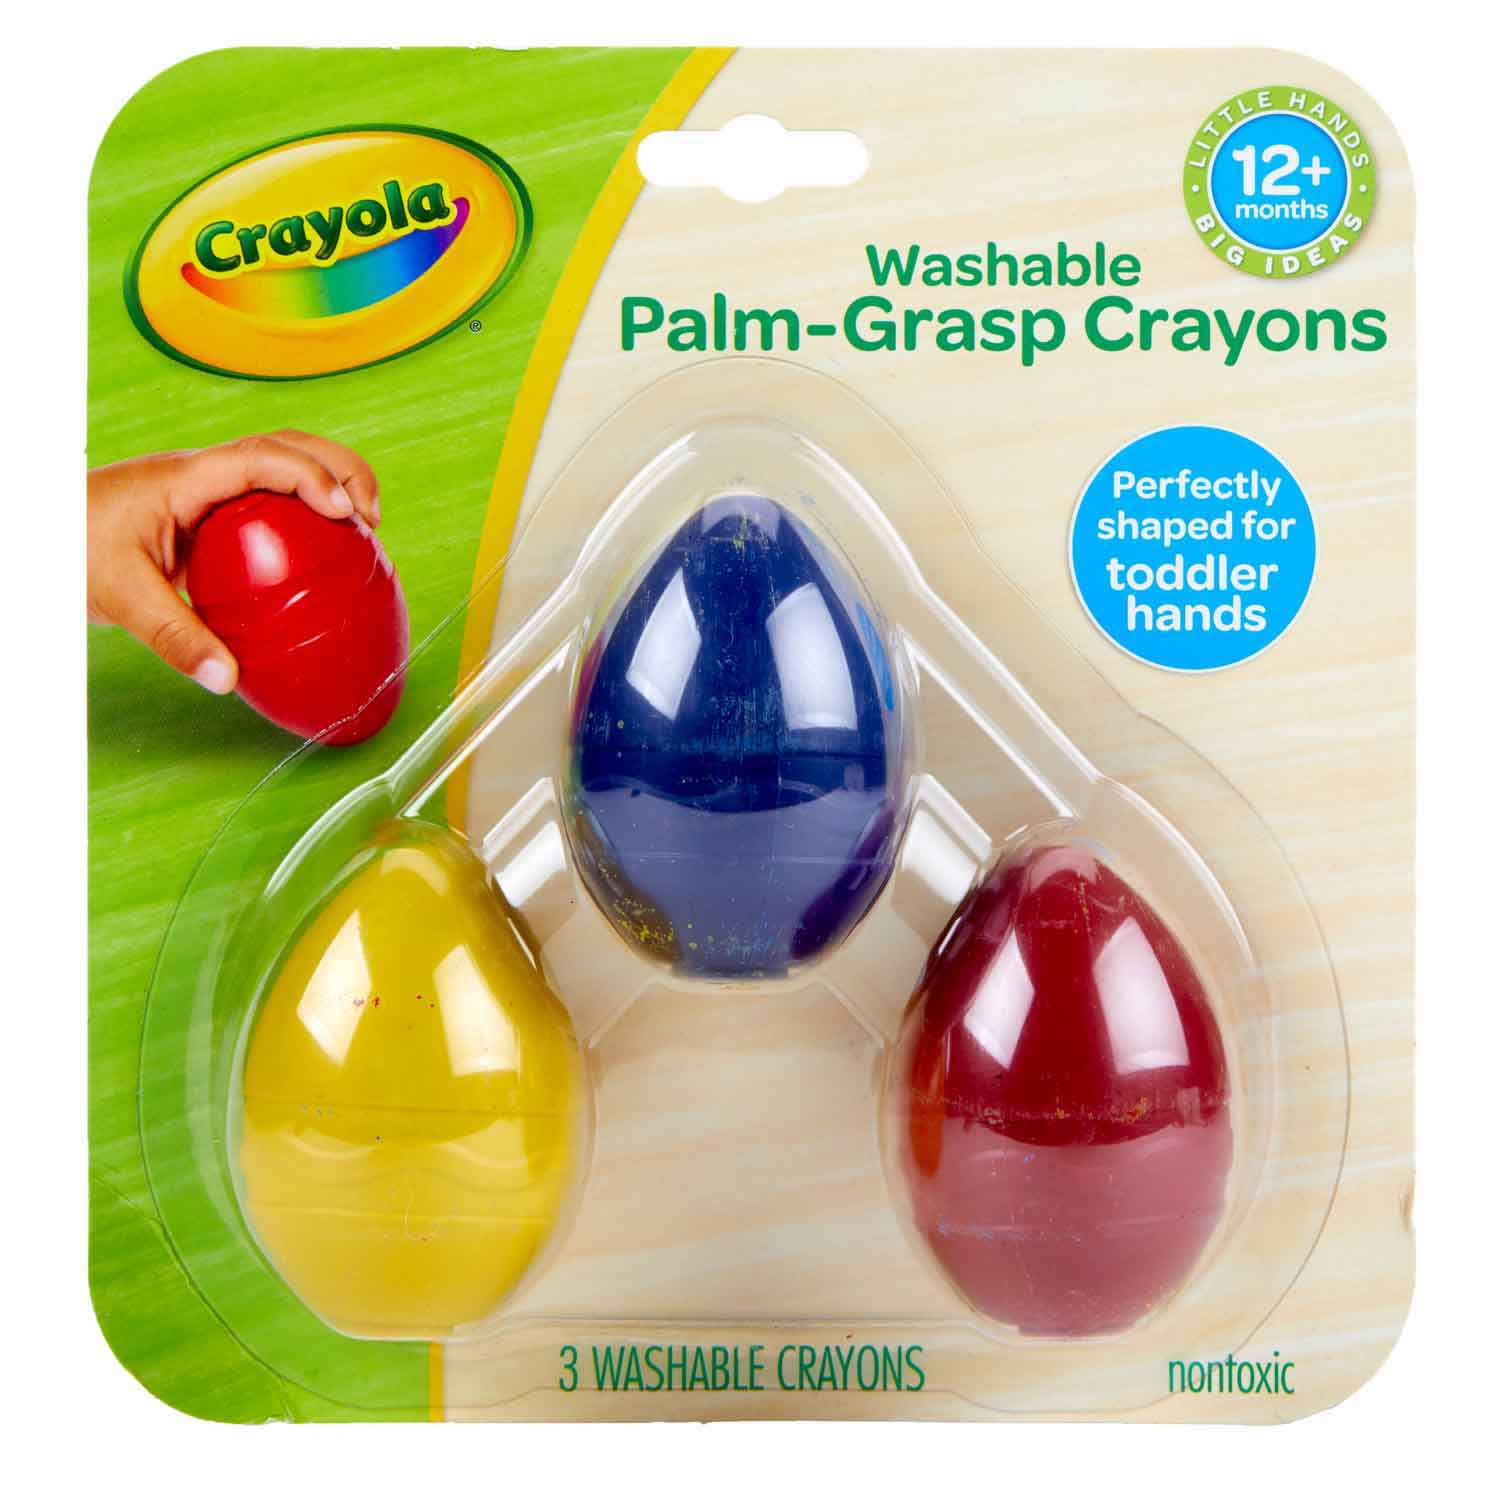 Crayola® Palm-Grasp Crayons